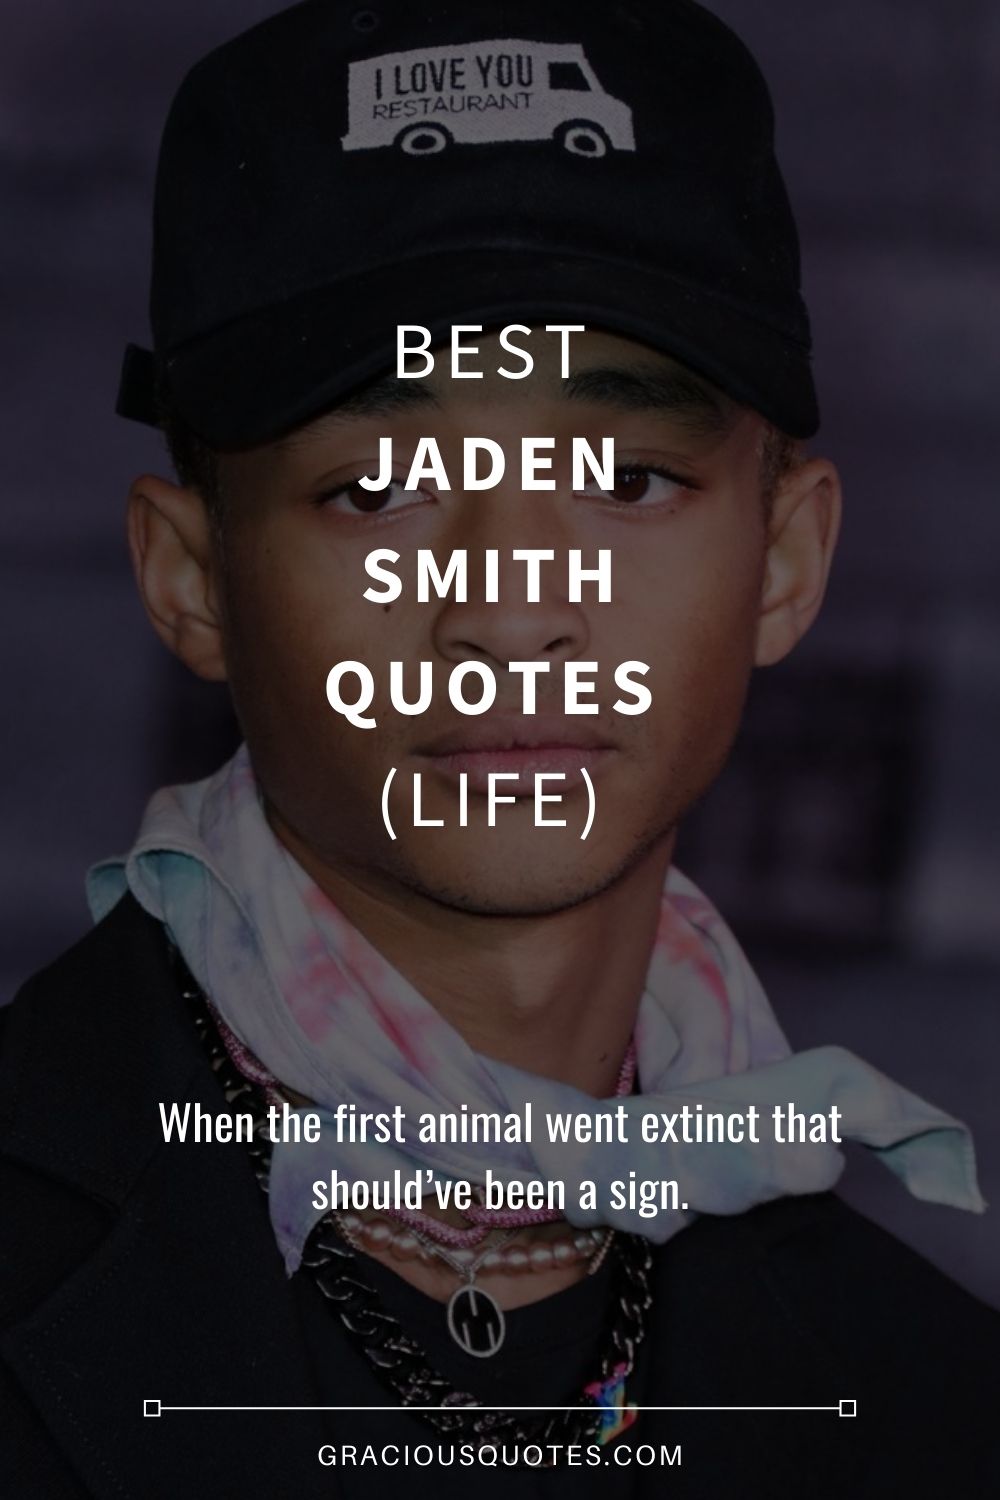 Best Jaden Smith Quotes (LIFE) - Gracious Quotes